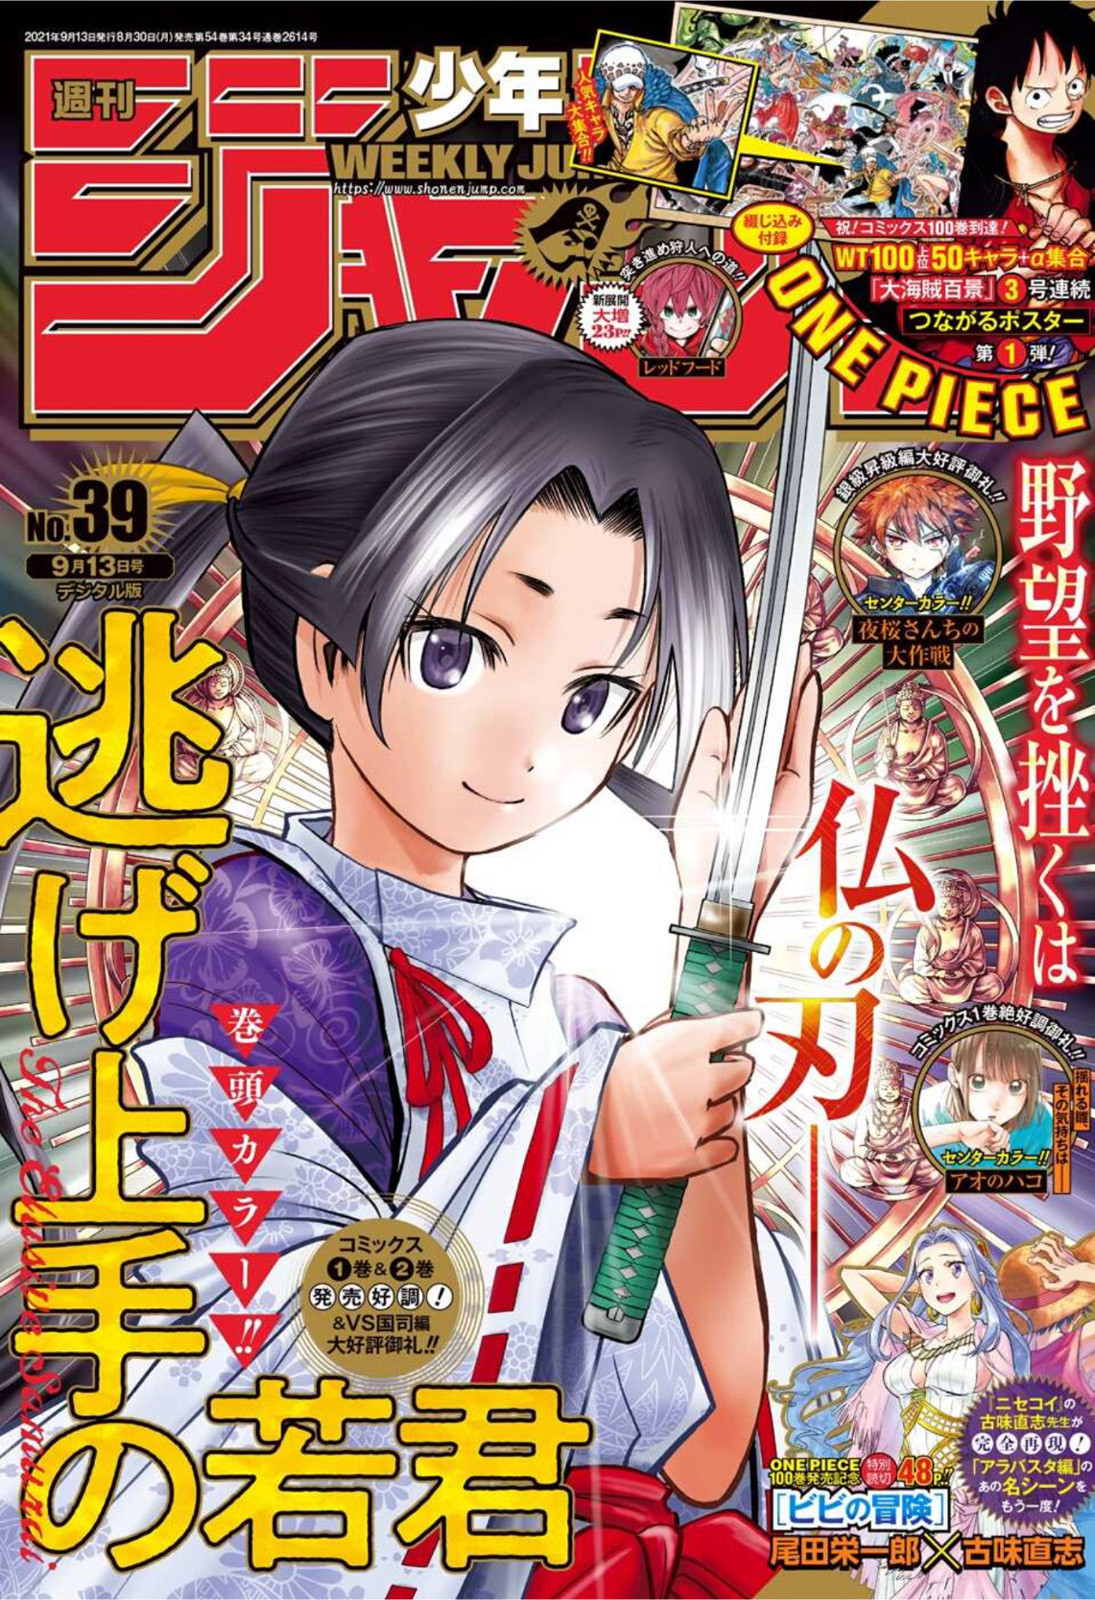 Weekly Shonen Jump Issue 39 21 Jump Database Fandom